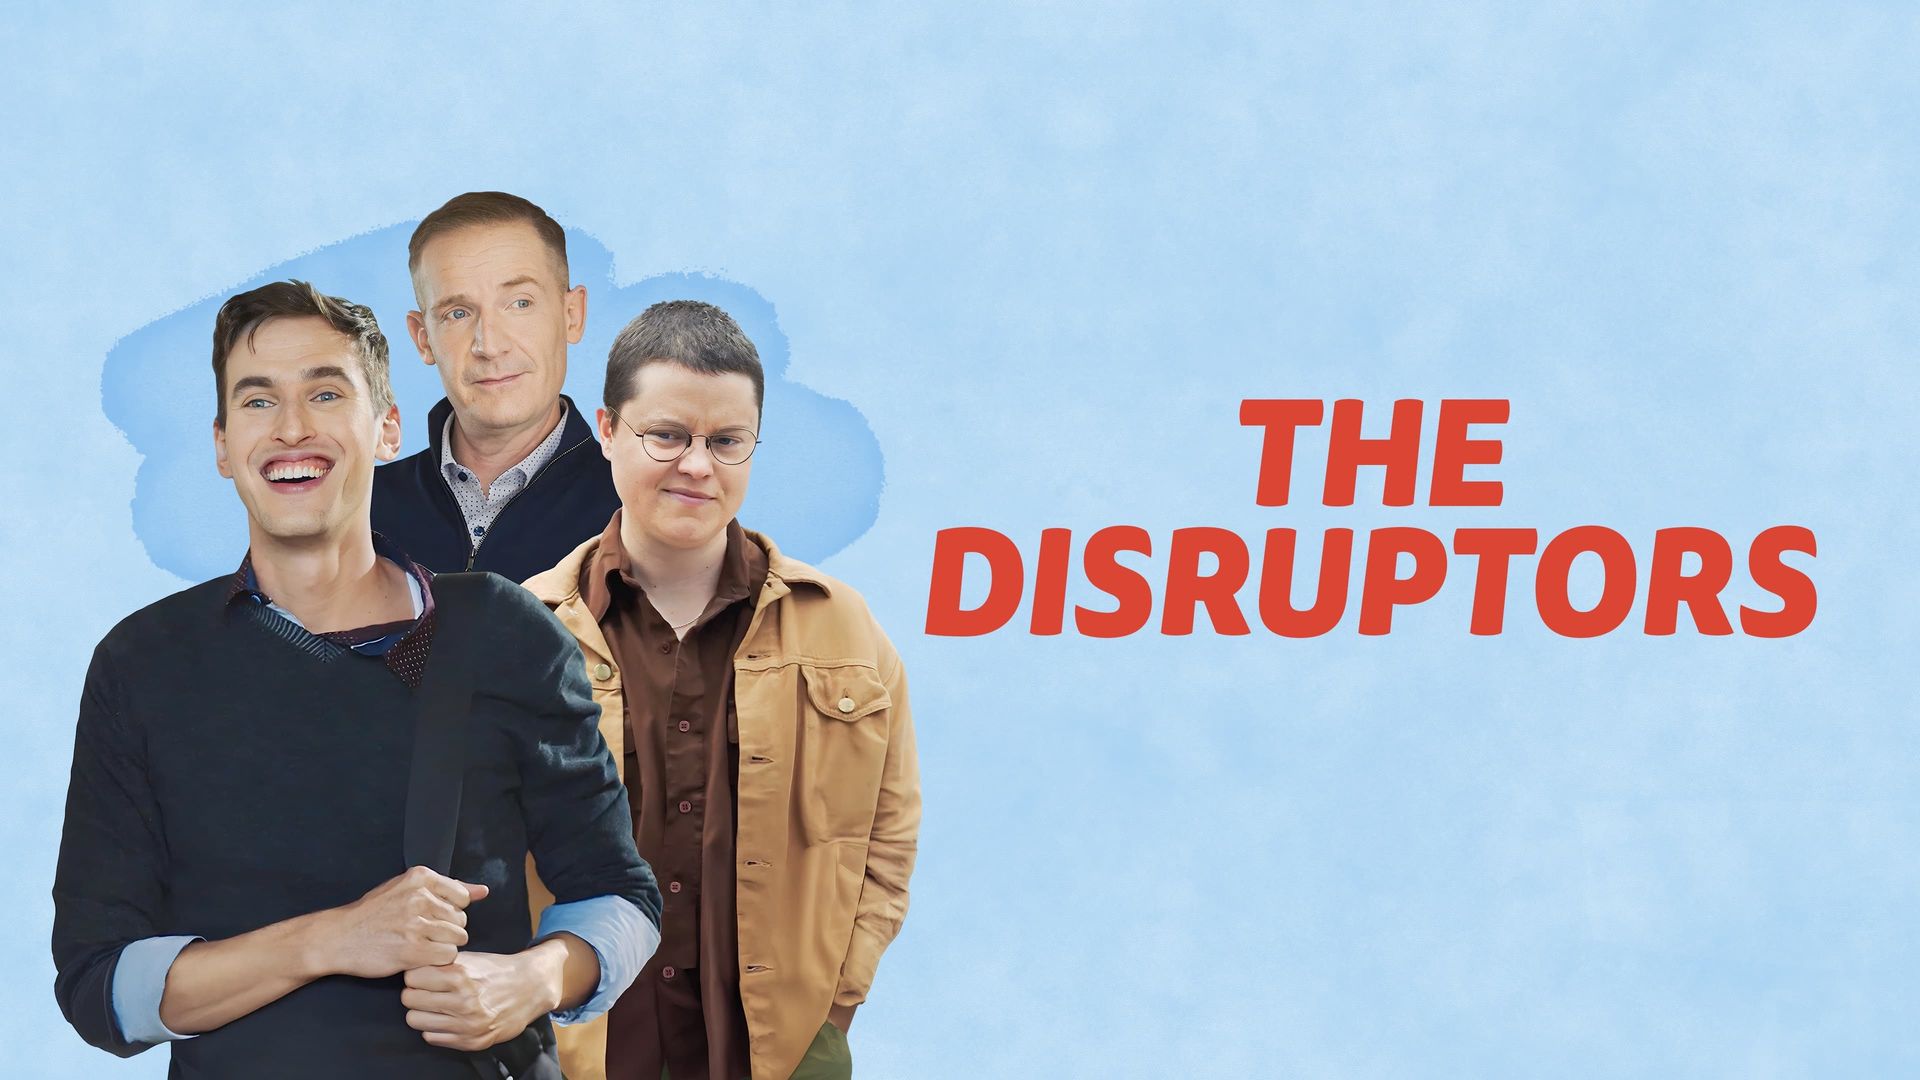 The Disruptors background